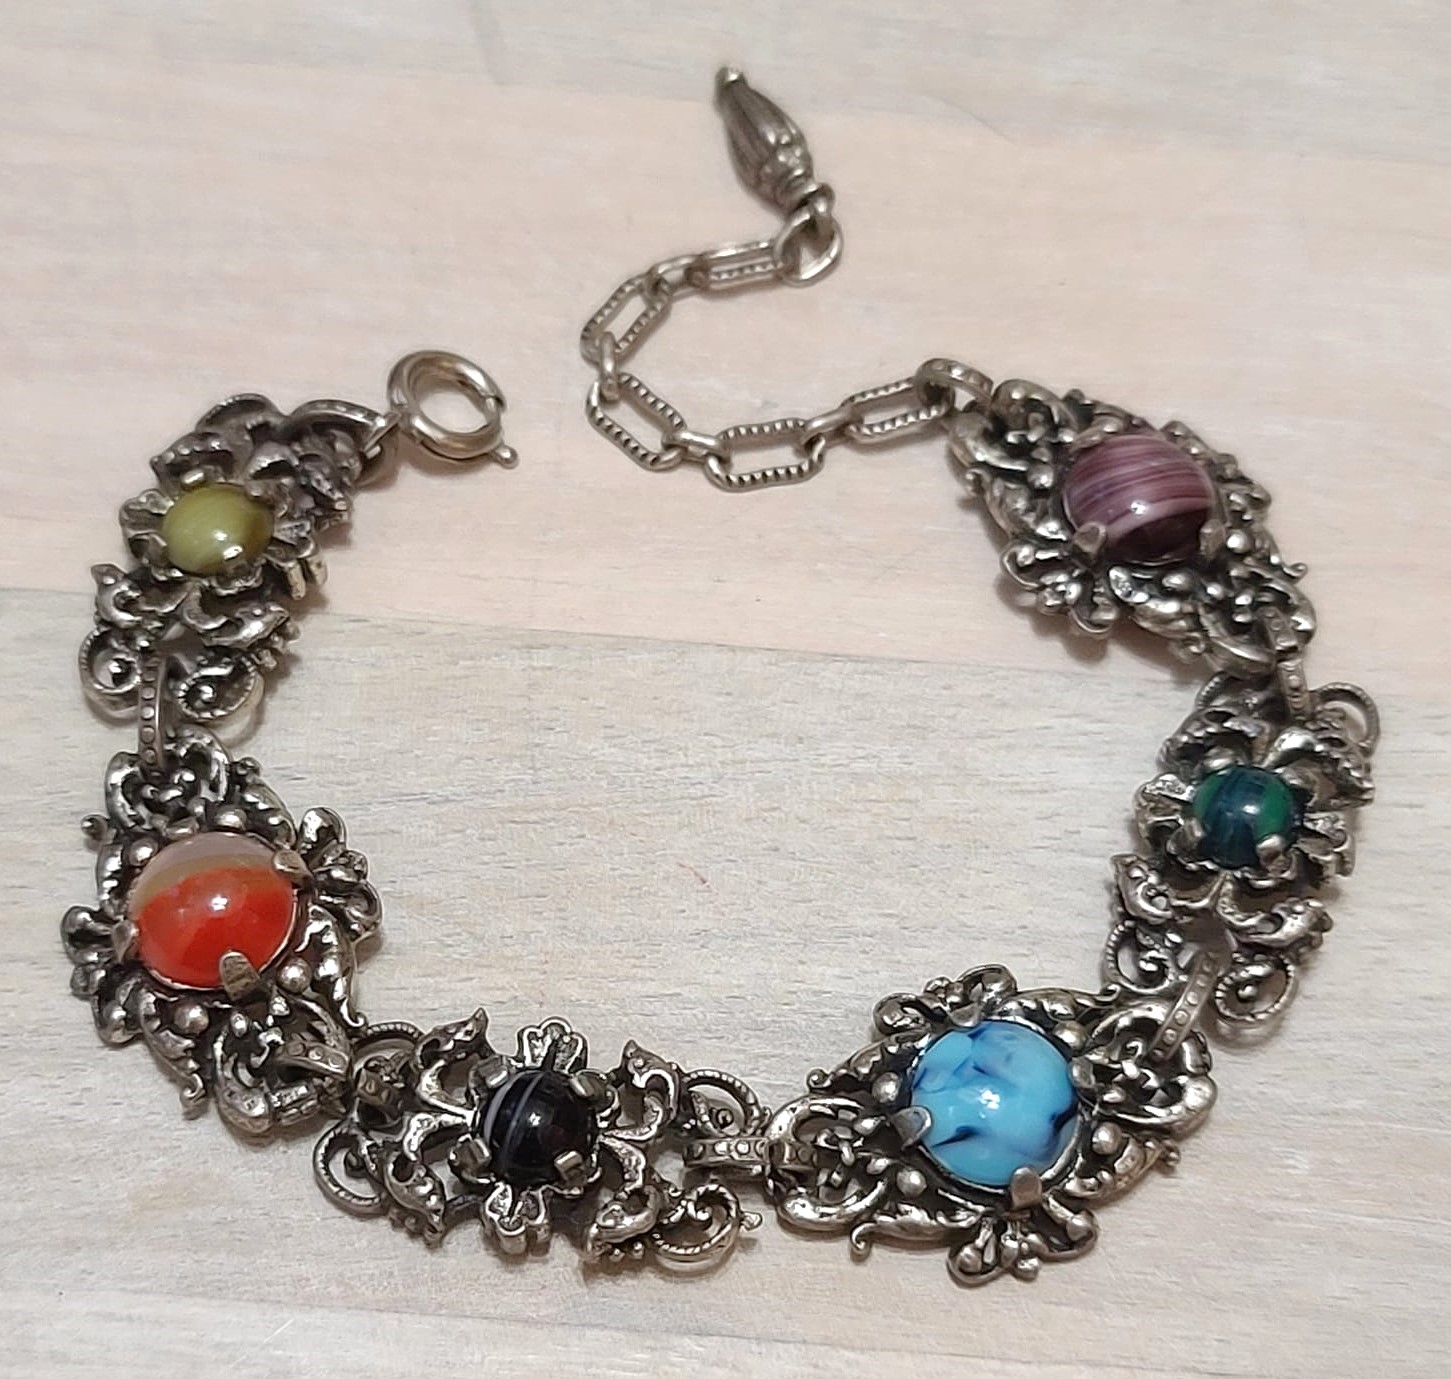 Vintage ornate bracelet, with multi color cabachons and filigree metal